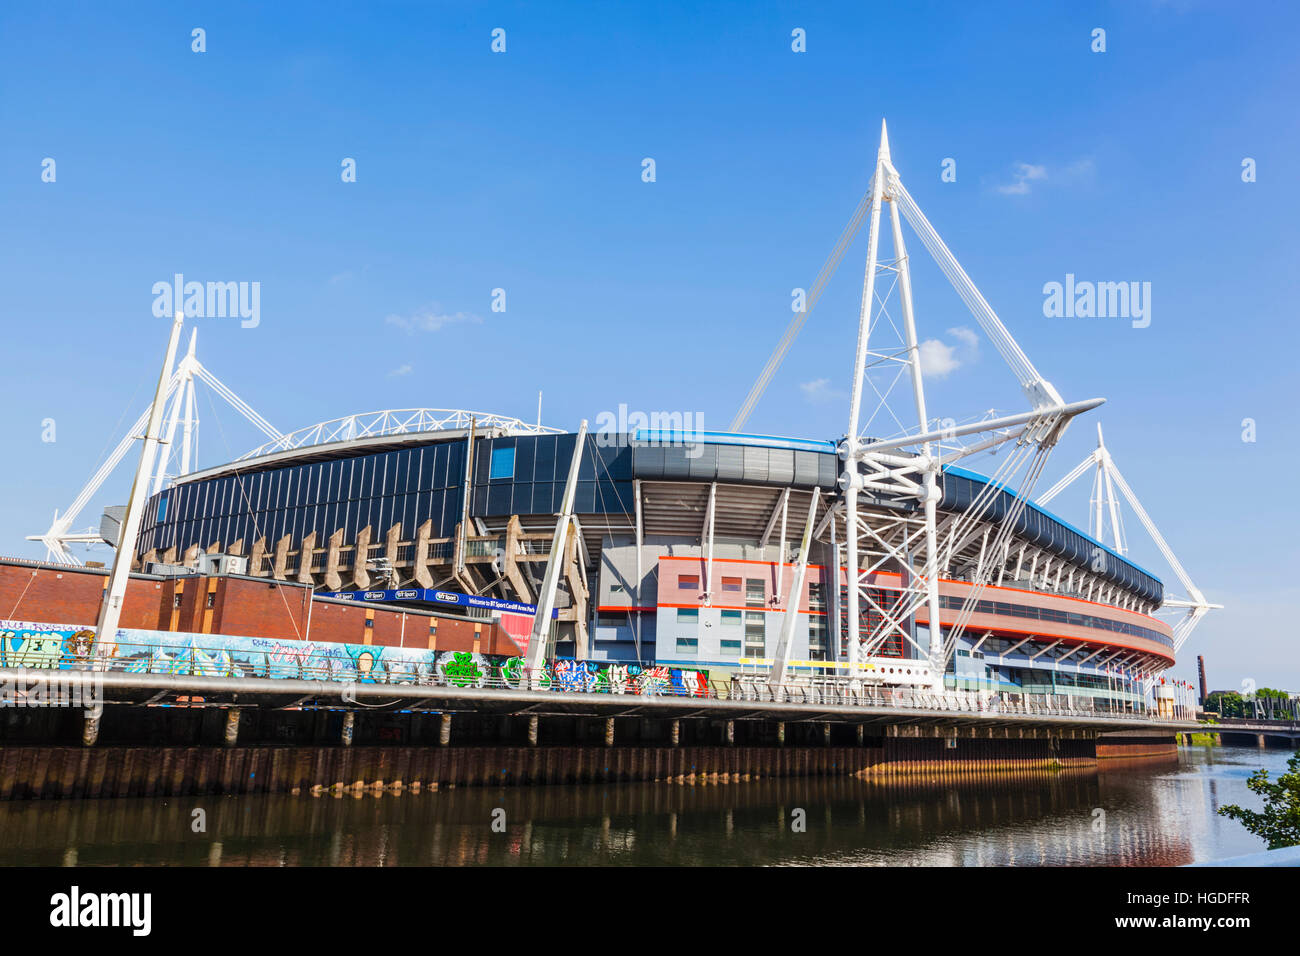 Pays de Galles, Cardiff, le Millennium Stadium aka Principauté Stadium Banque D'Images